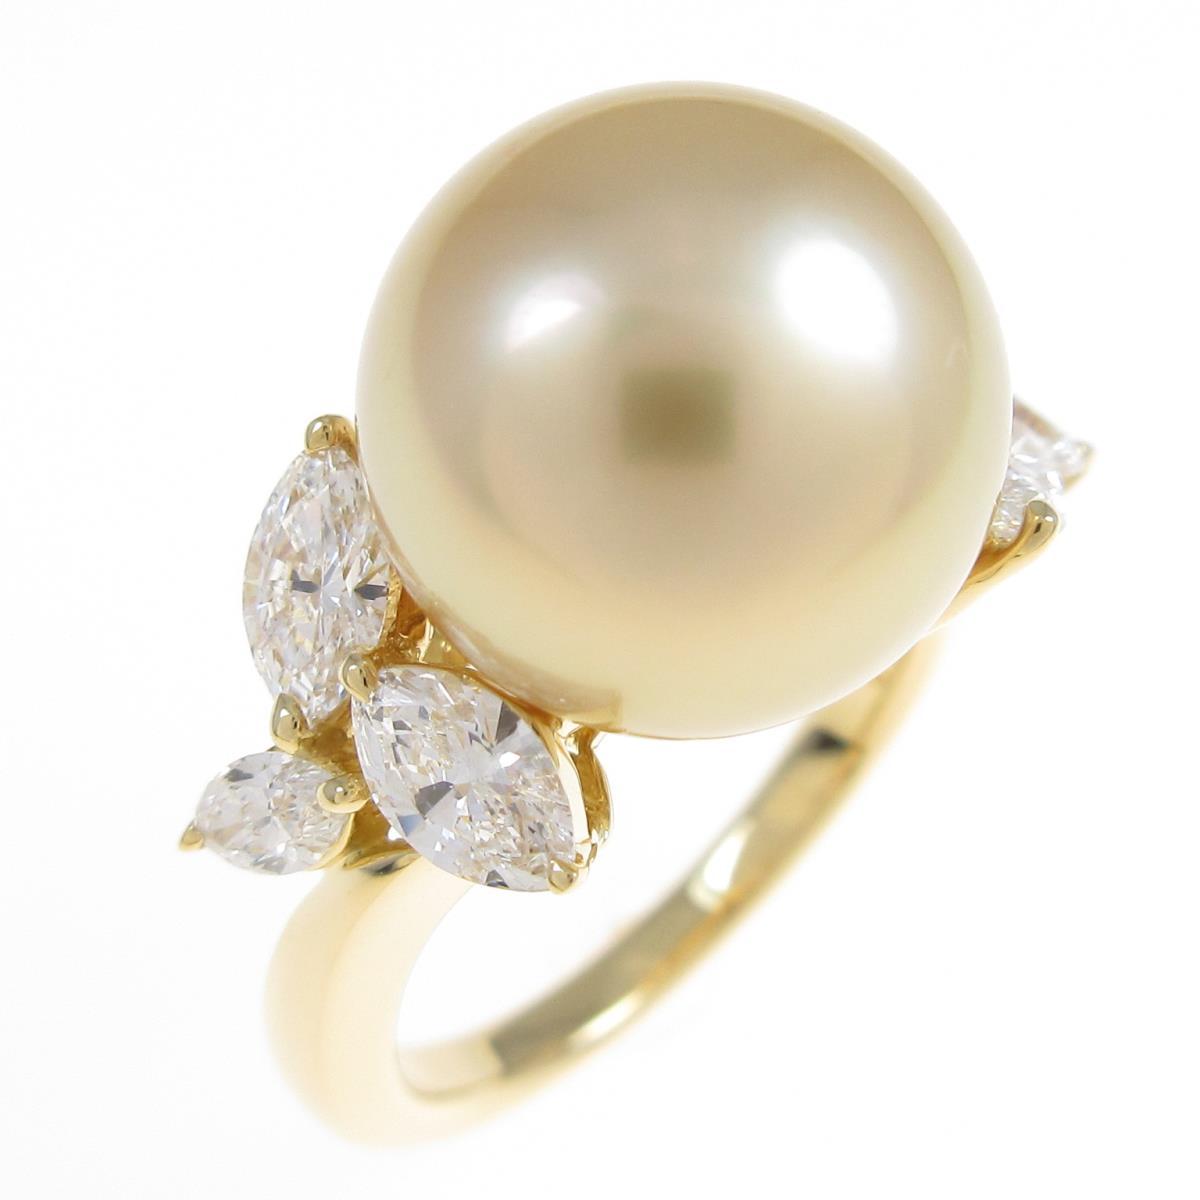 Authentic Mikimoto South sea Pearl ring #260-003-661-4820 | eBay